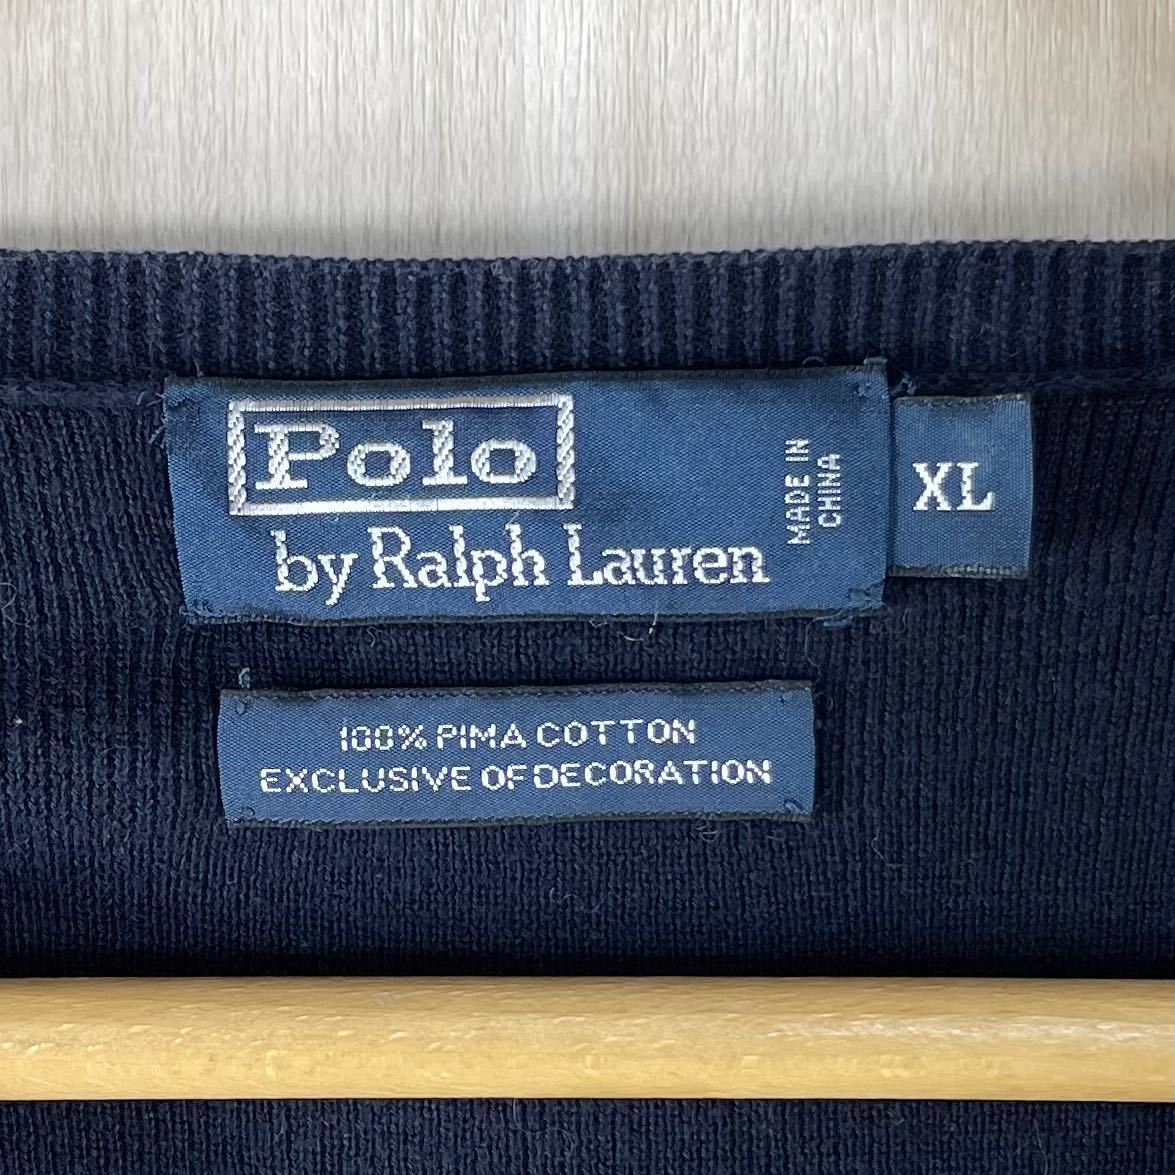 [90s]POLO Polo bai Ralph Lauren вышивка красный po колено V шея хлопок вязаный свитер XL надпись темно синий темно-синий 90 годы American Casual б/у одежда 